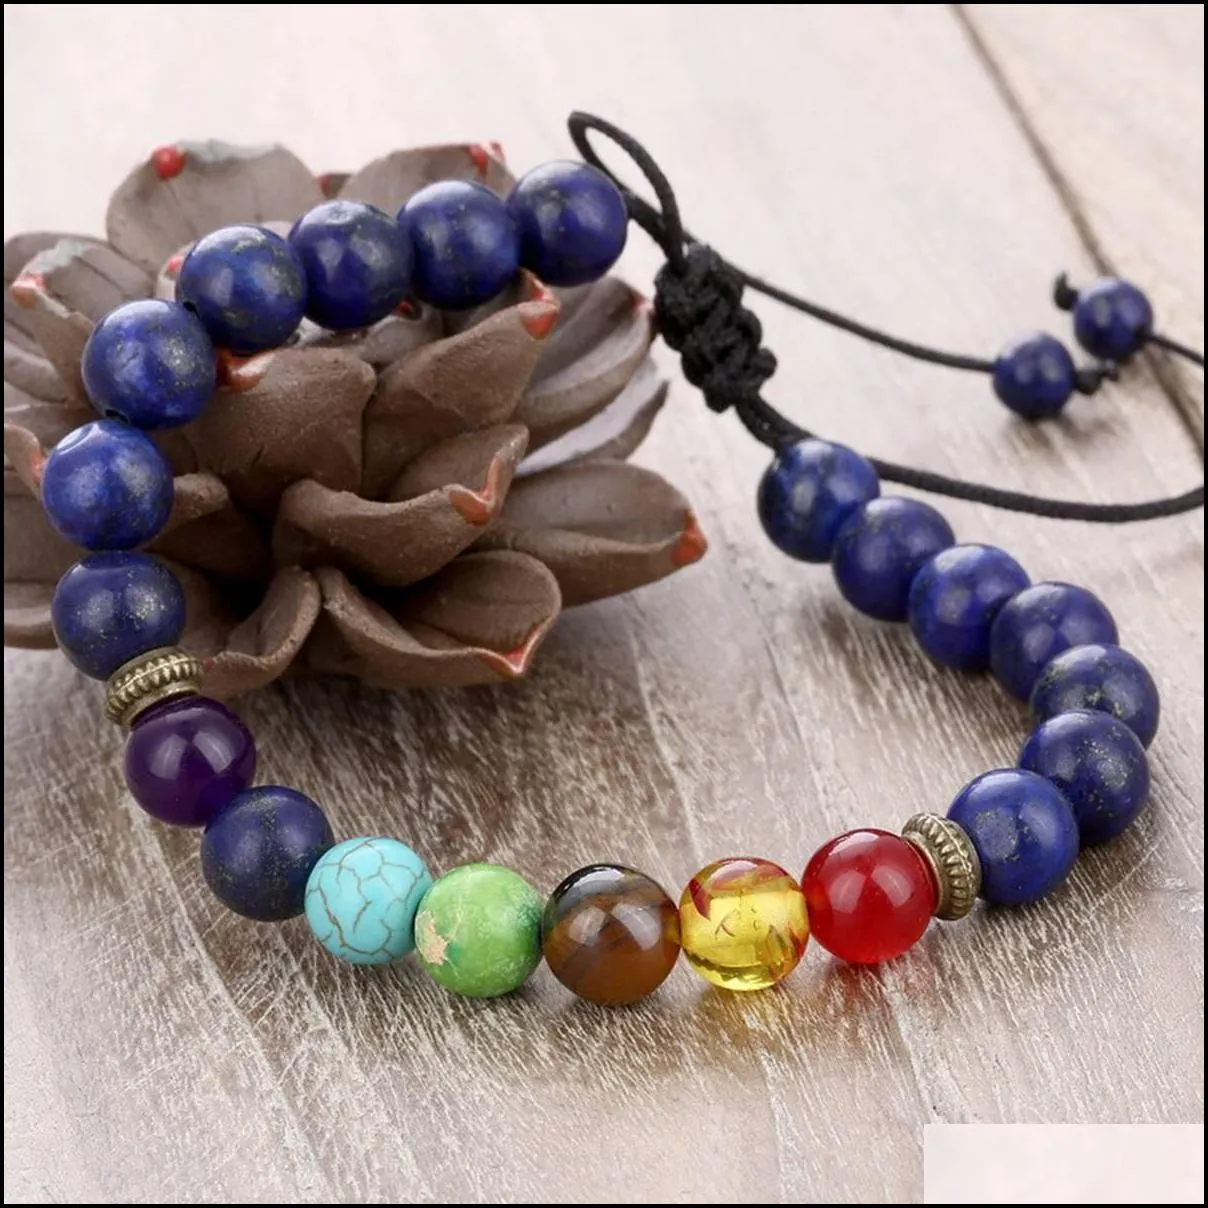 10pc/set new natural stone 8mm lava stone yoga energy bracelet volcanic stone seven chakra braid bracelets